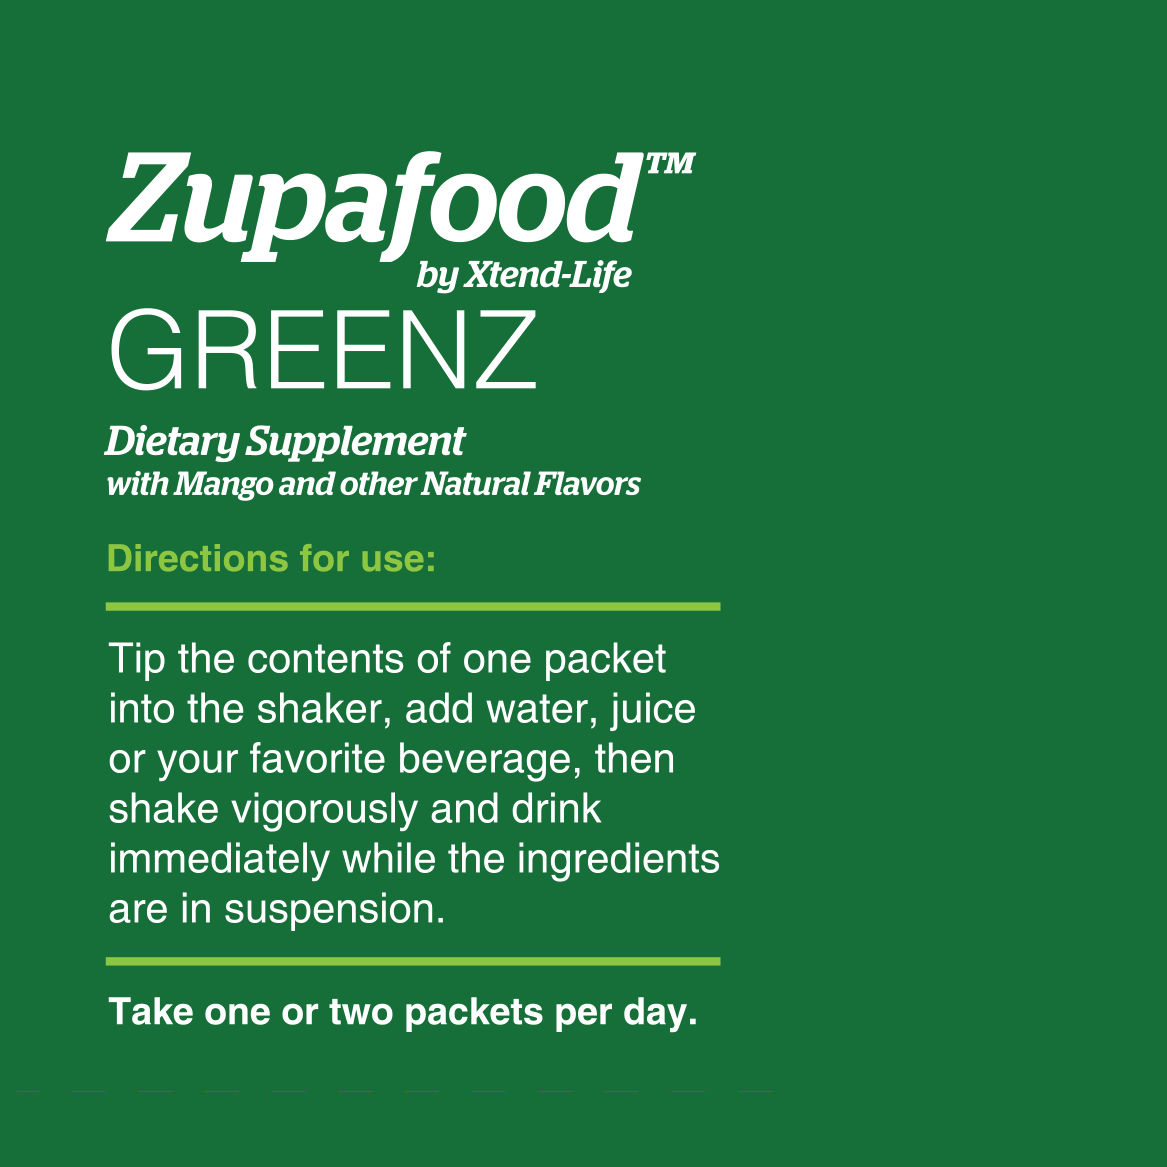 Zupafood GREENZ